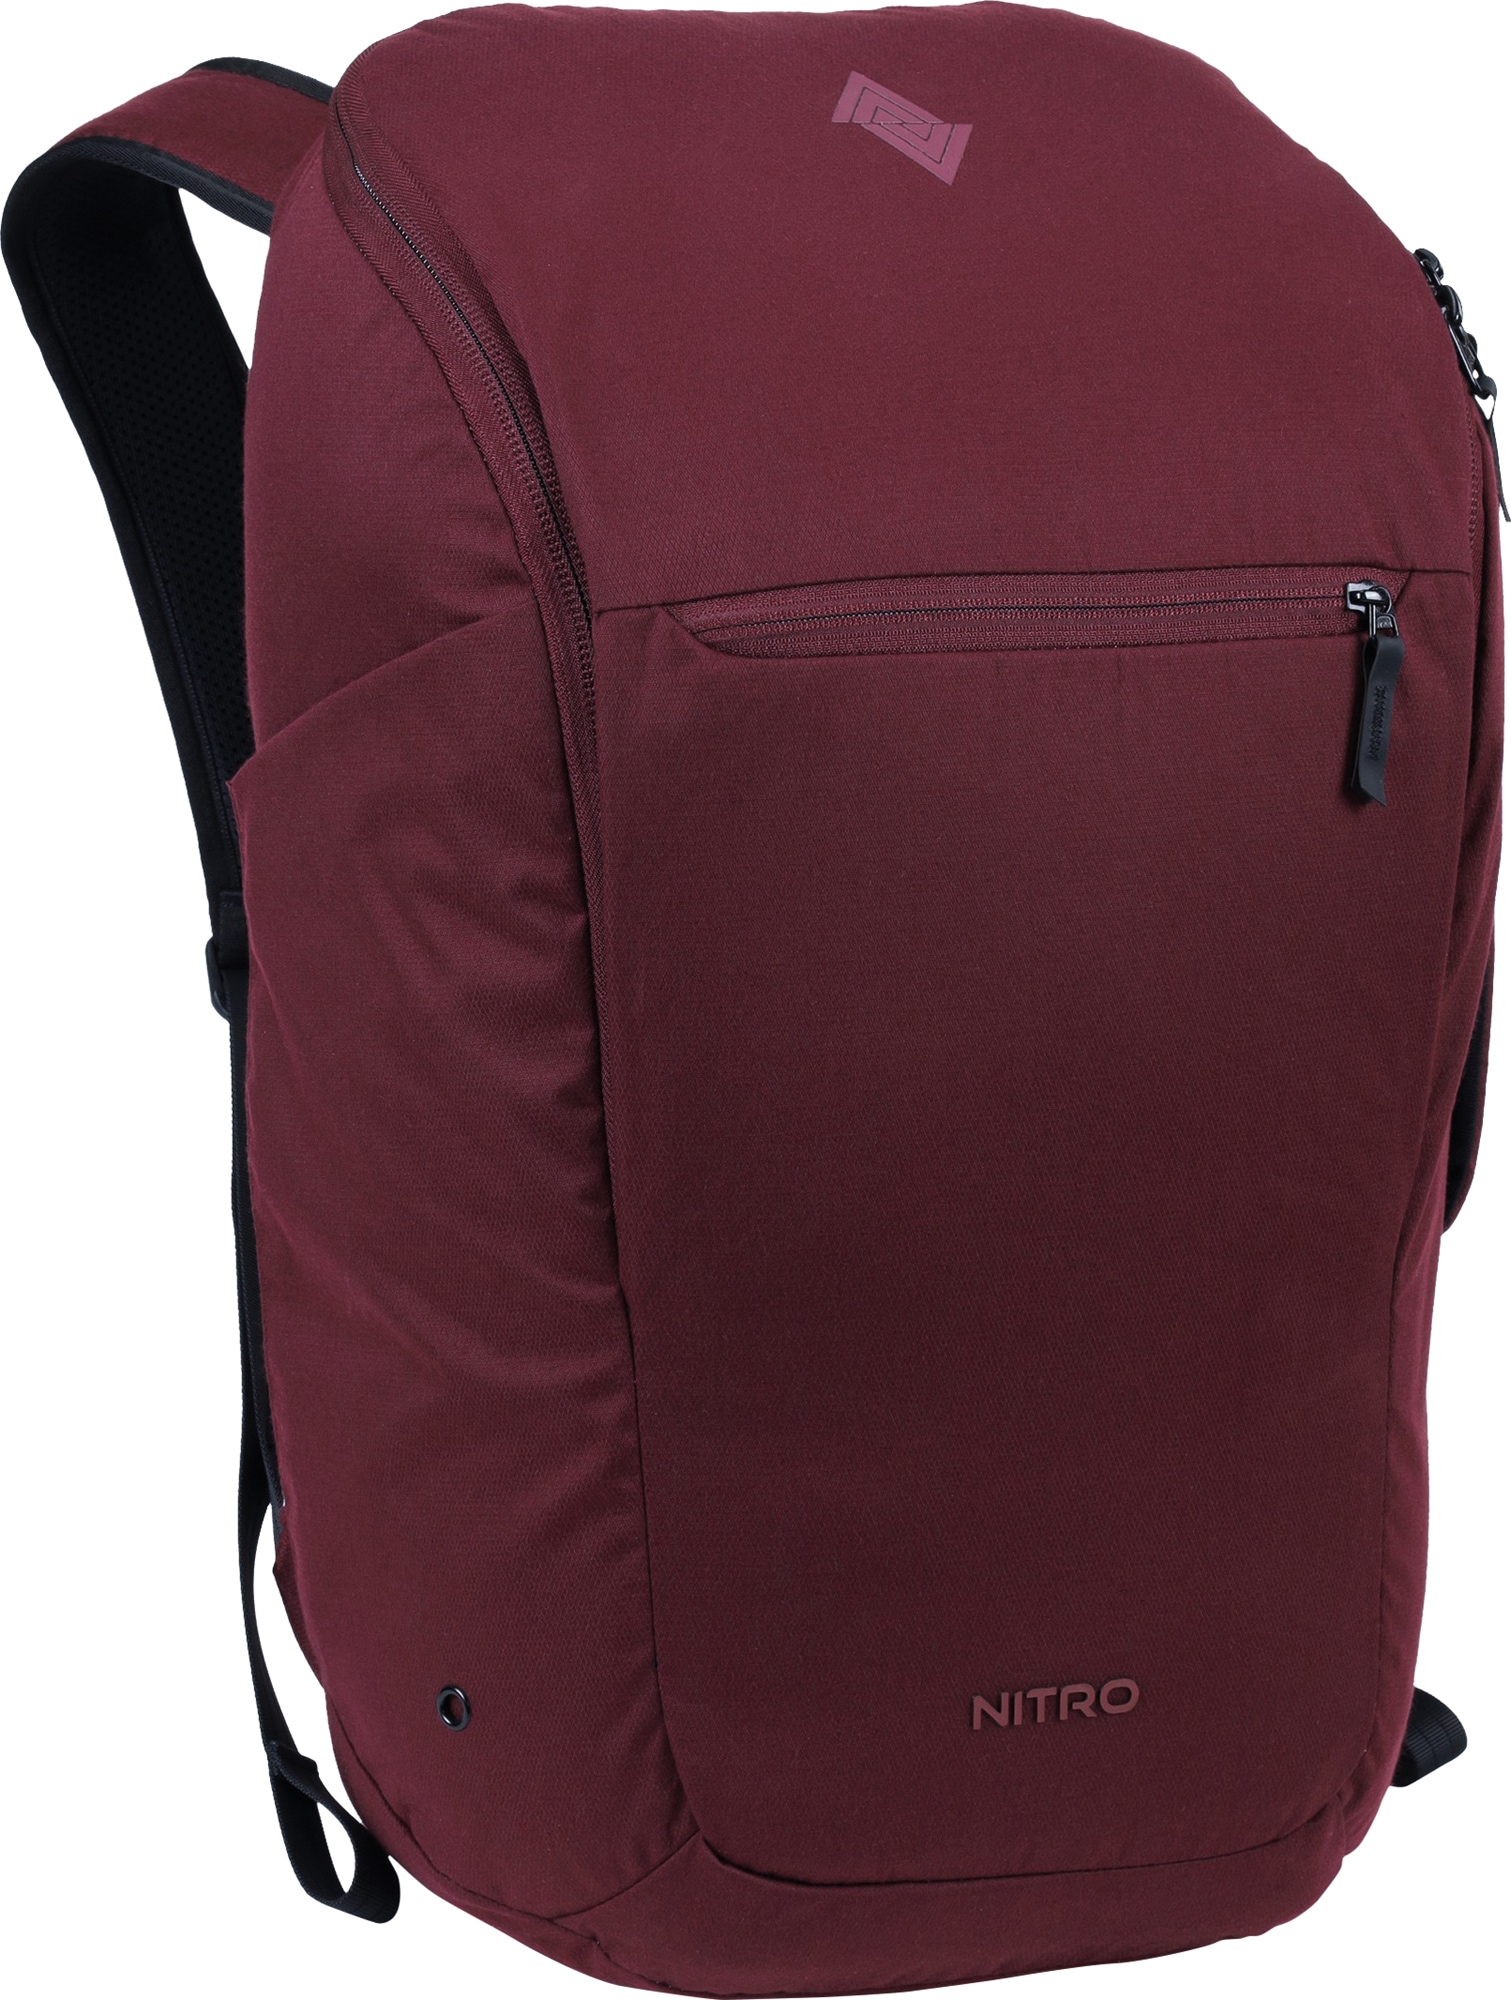 NITRO Freizeitrucksack "Nikuro Traveler", Reisetasche, Travel Bag, Alltagsrucksack, Daypack